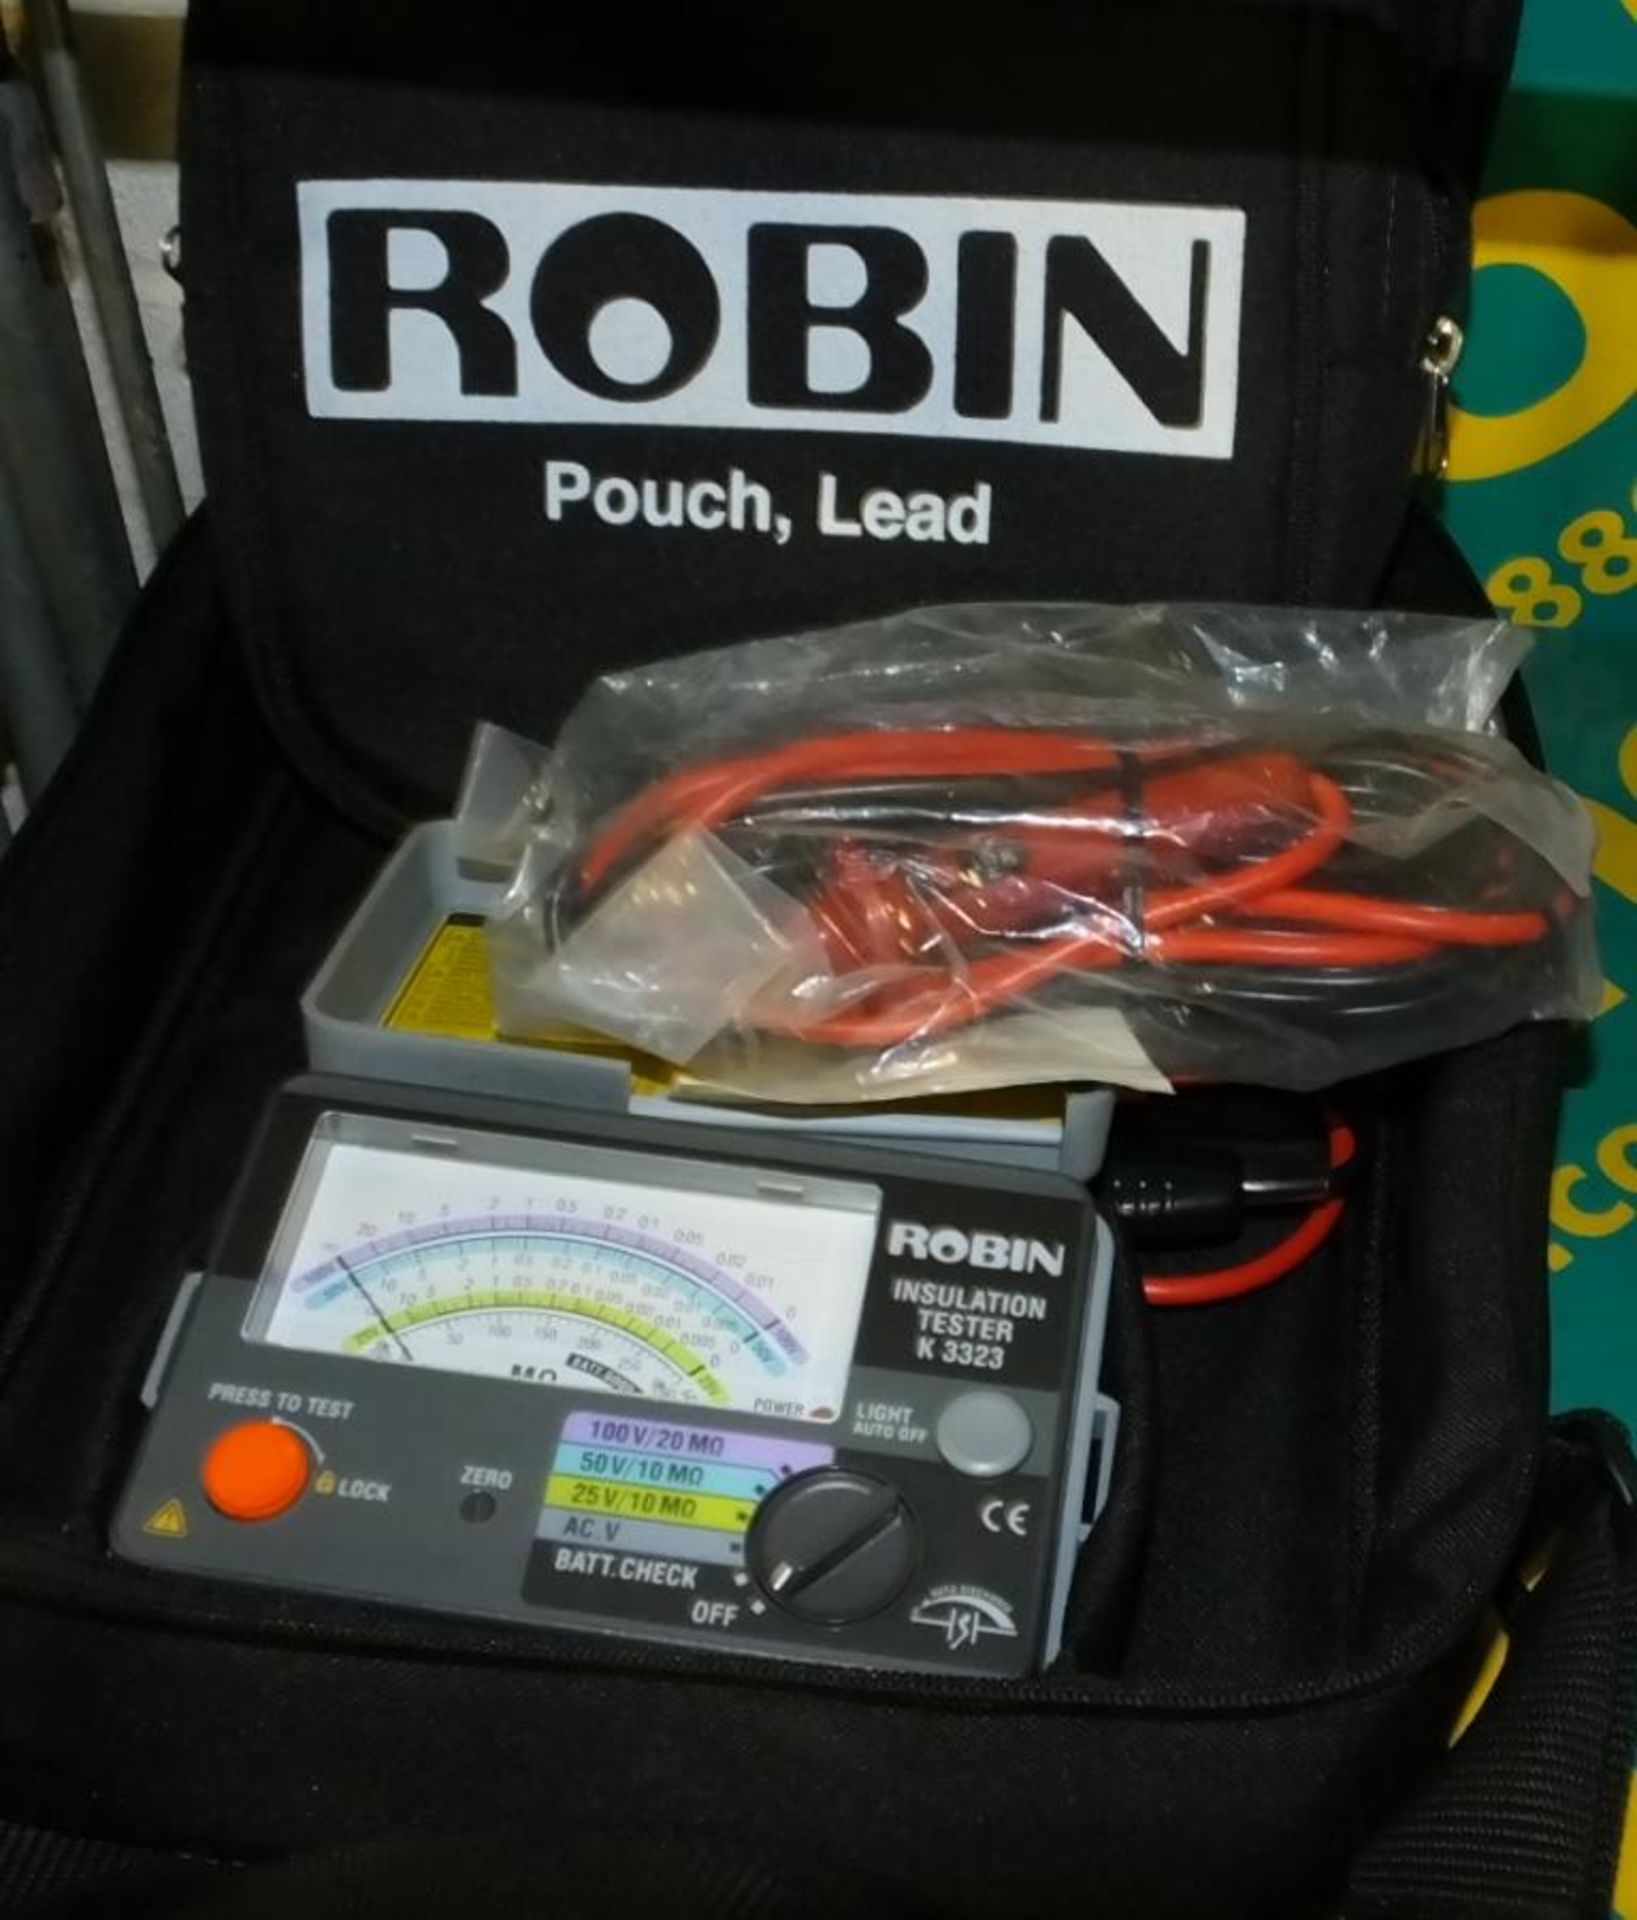 Robin K3323 Test Set Insulation, Low Voltage